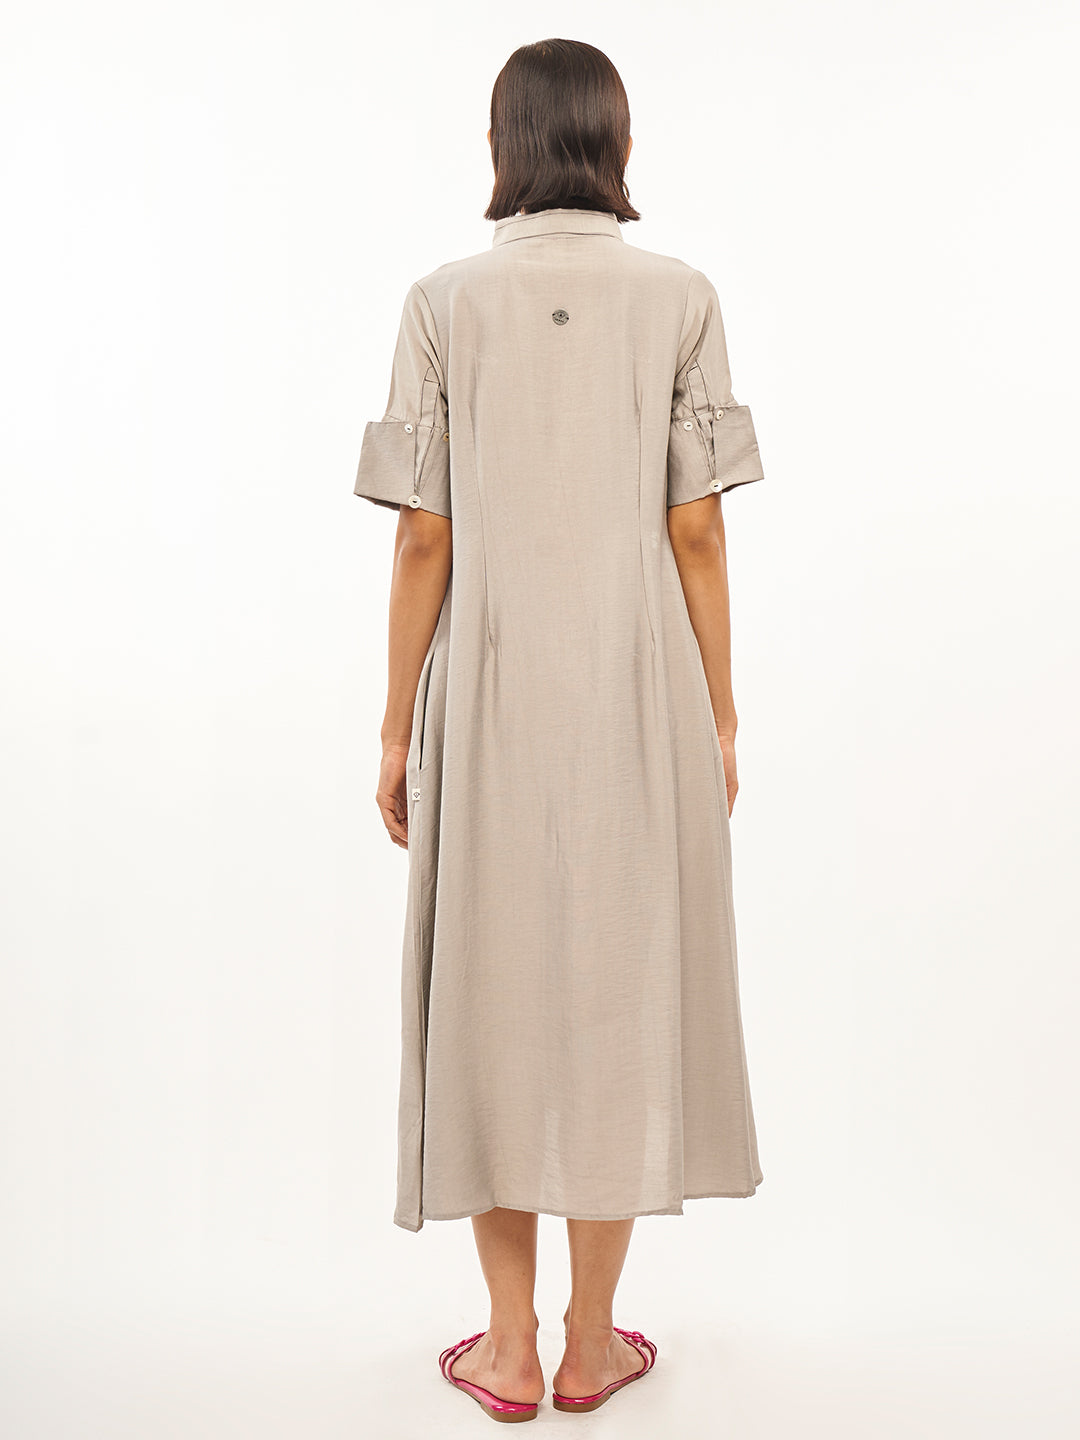 Off-White Shirt Style Dress - ARH481